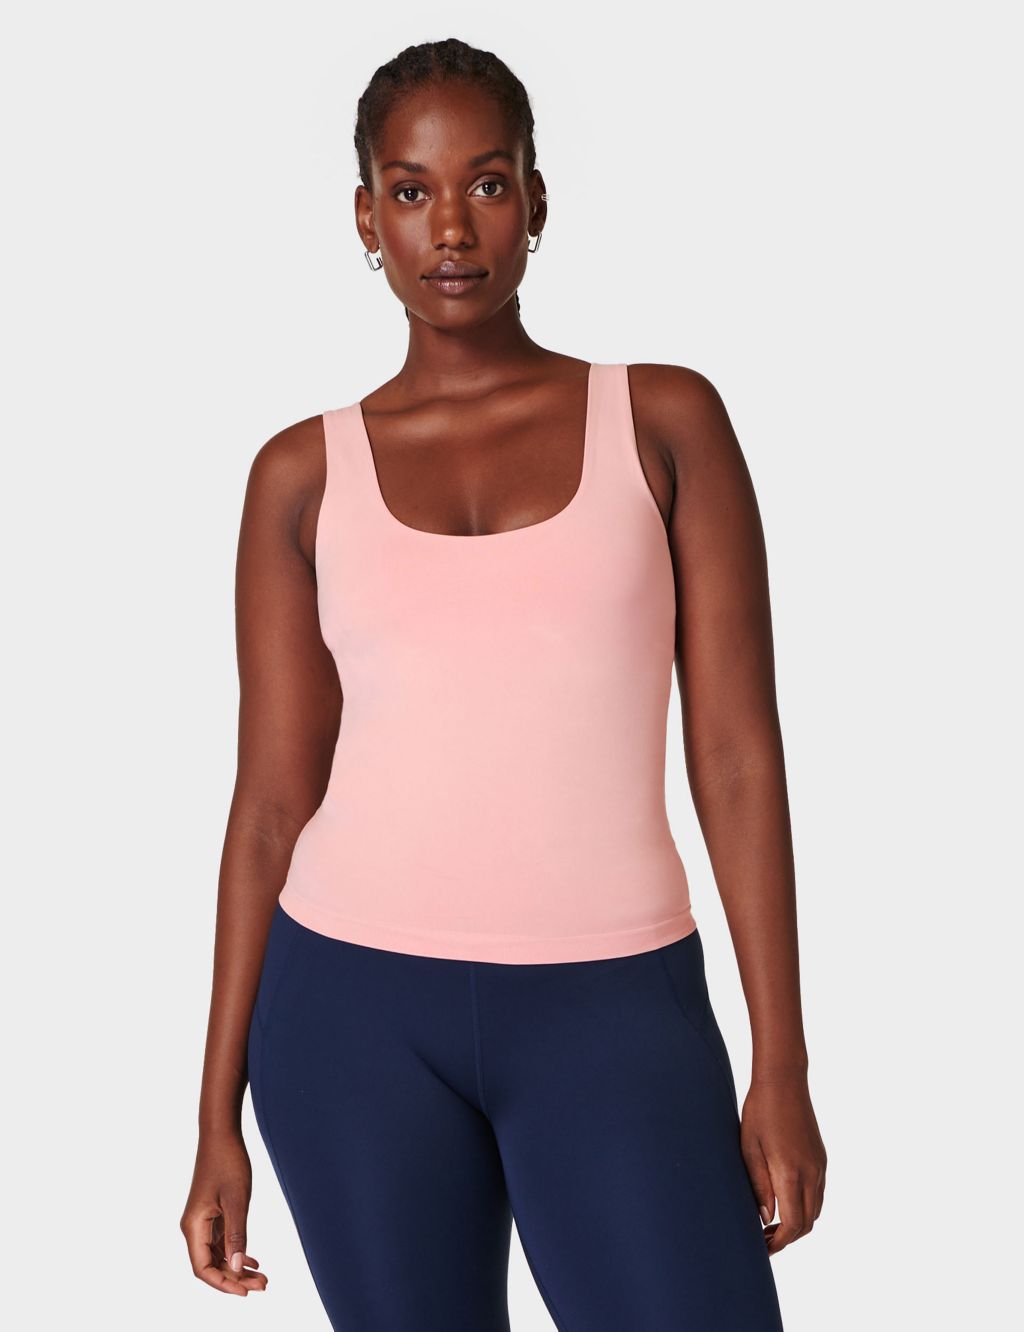 Niuer Women Jersey Tank Top Padded Shoulder Sleeveless Active Sportswear  Sports Vest Blouse Pink S(US 4-6) 